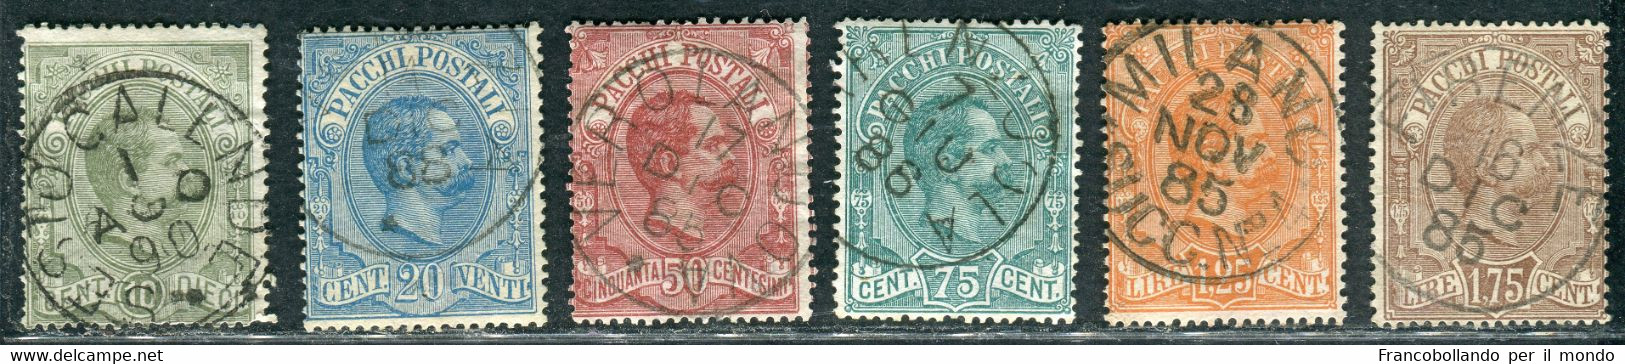 1884/86 Regno D'Italia Pacchi Postali Serie Completa N° S 2100 Usata - Pacchi Postali